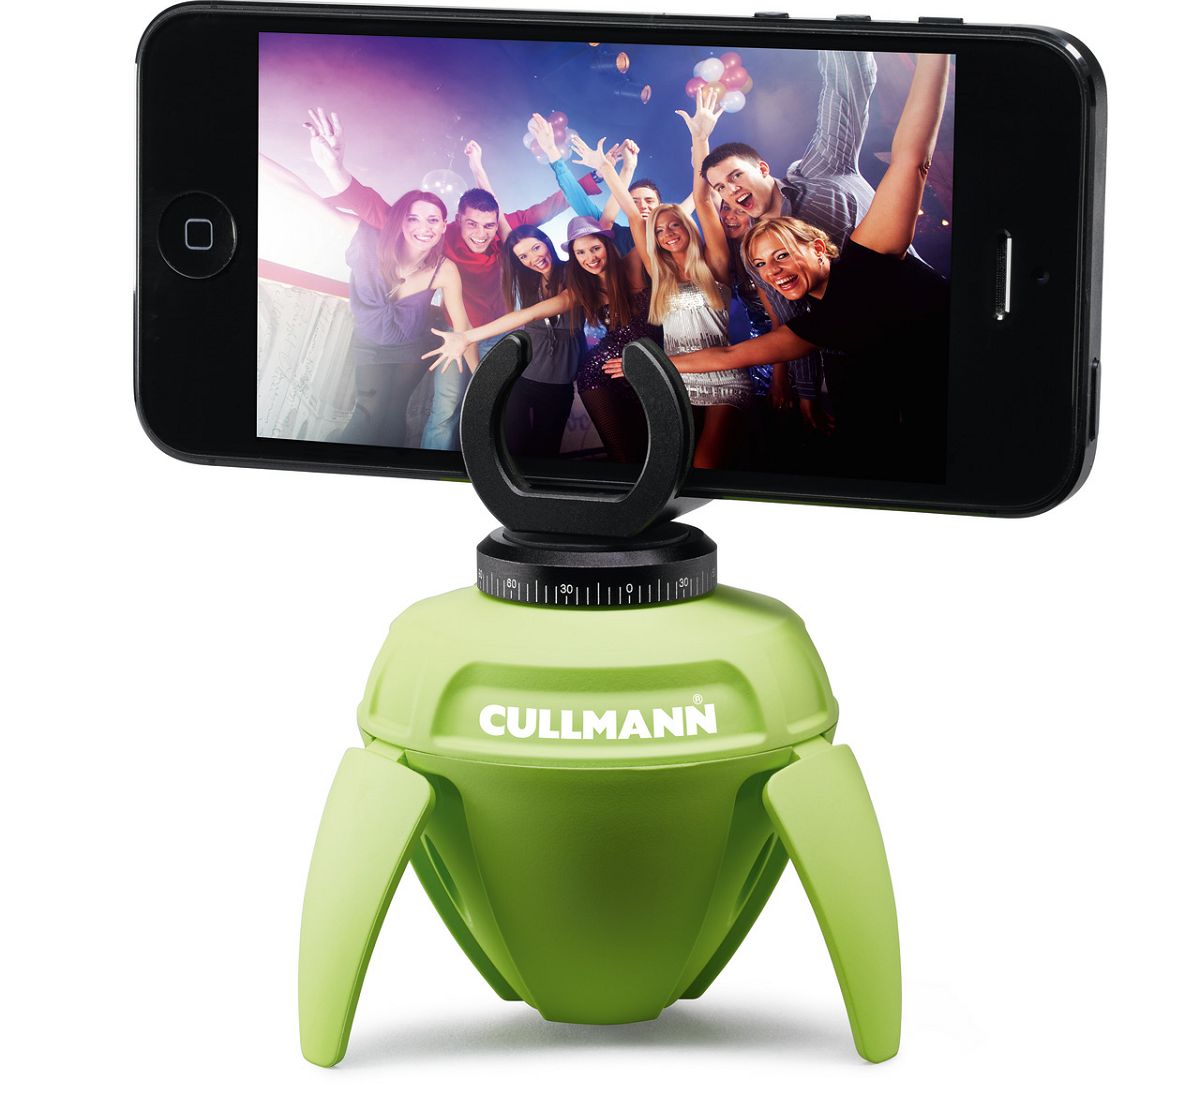 Cullmann SMARTpano 360 green motorizirana panoramska glava za GoPro, smartphone, mobitele, kompaktne fotoaparate (50221)